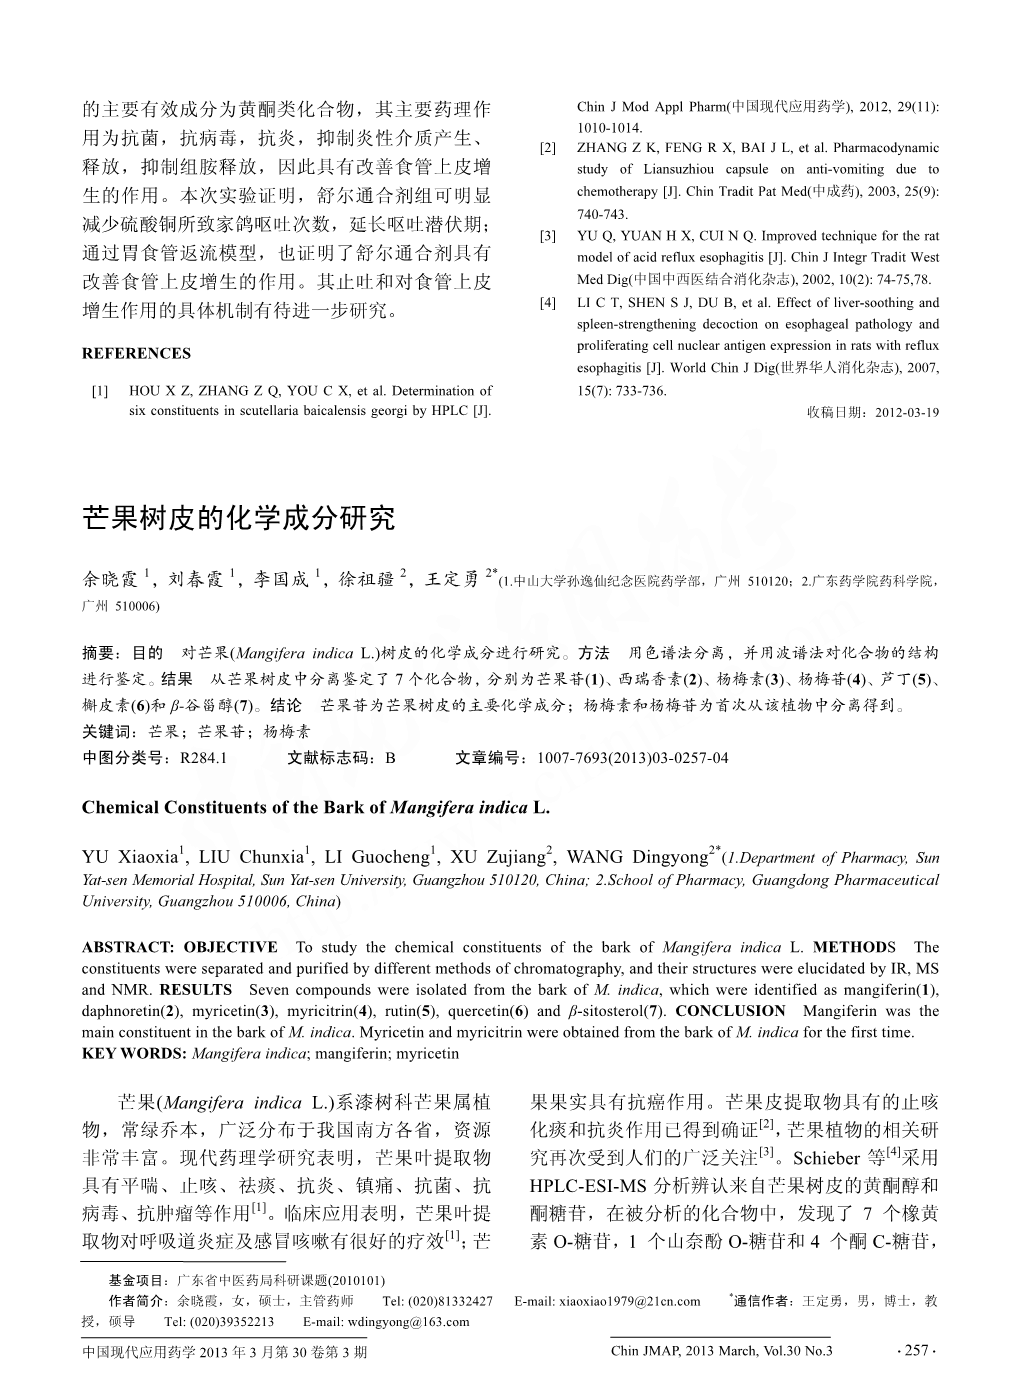 Page 1 2013 3 30 3 Chin JMAP, 2013 March, Vol.30 No.3 G257g